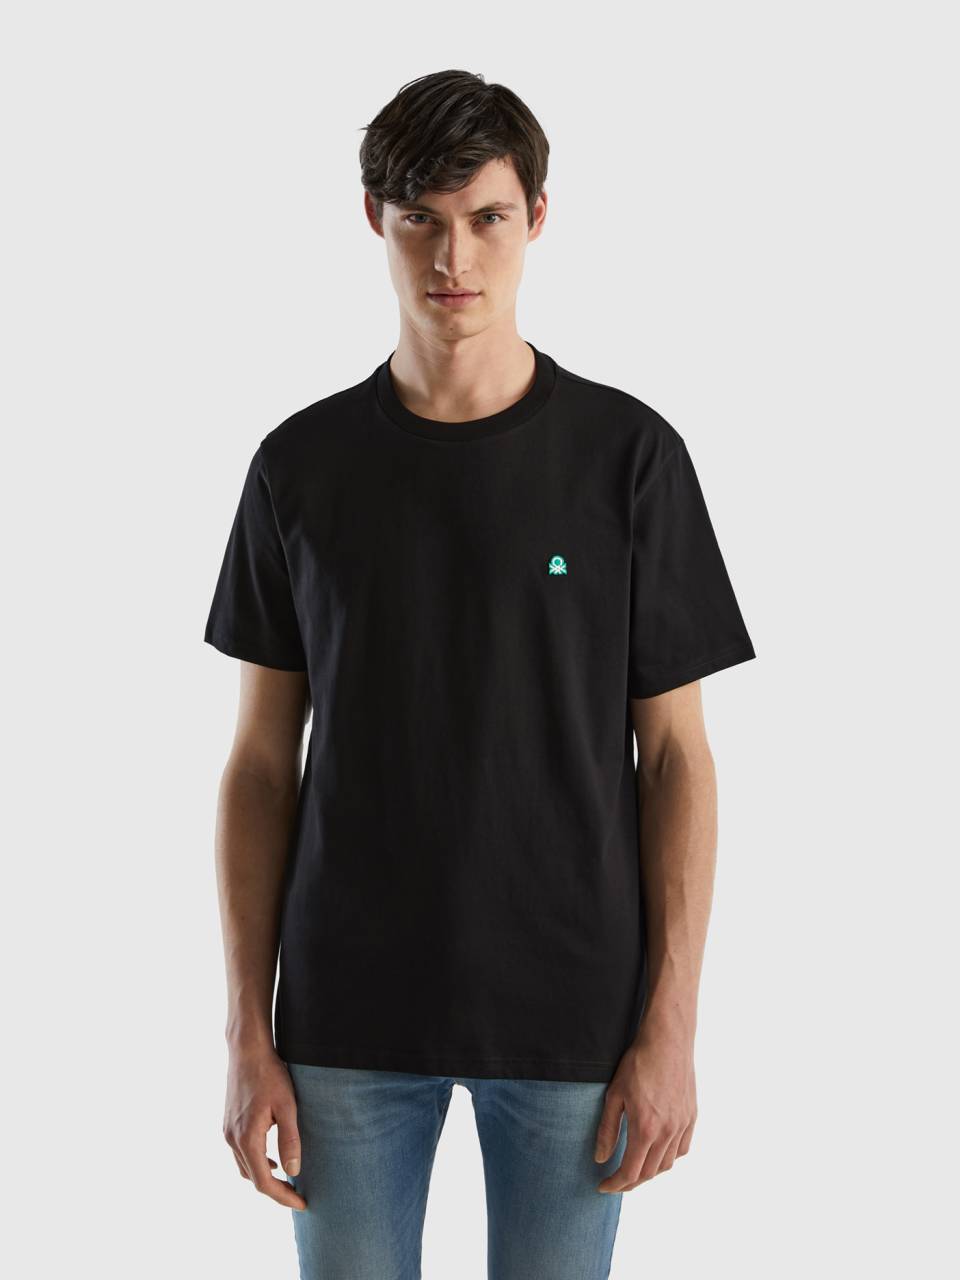 basic | Black Benetton t-shirt - 100% cotton organic